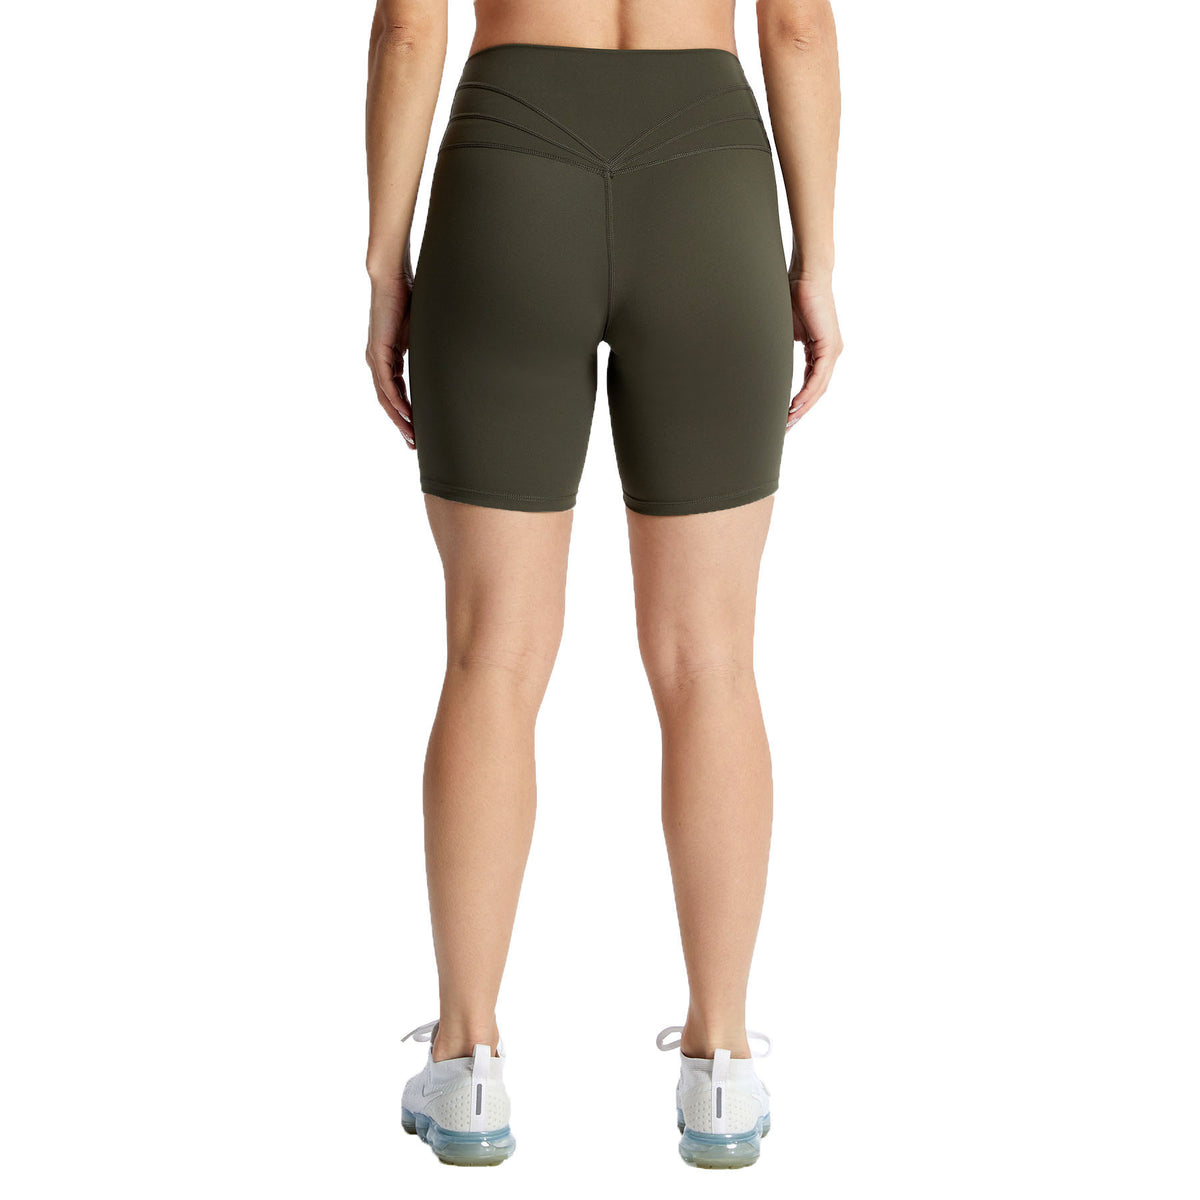 Aoxjox Metamorph Workout Biker Shorts for Women Tummy Control High